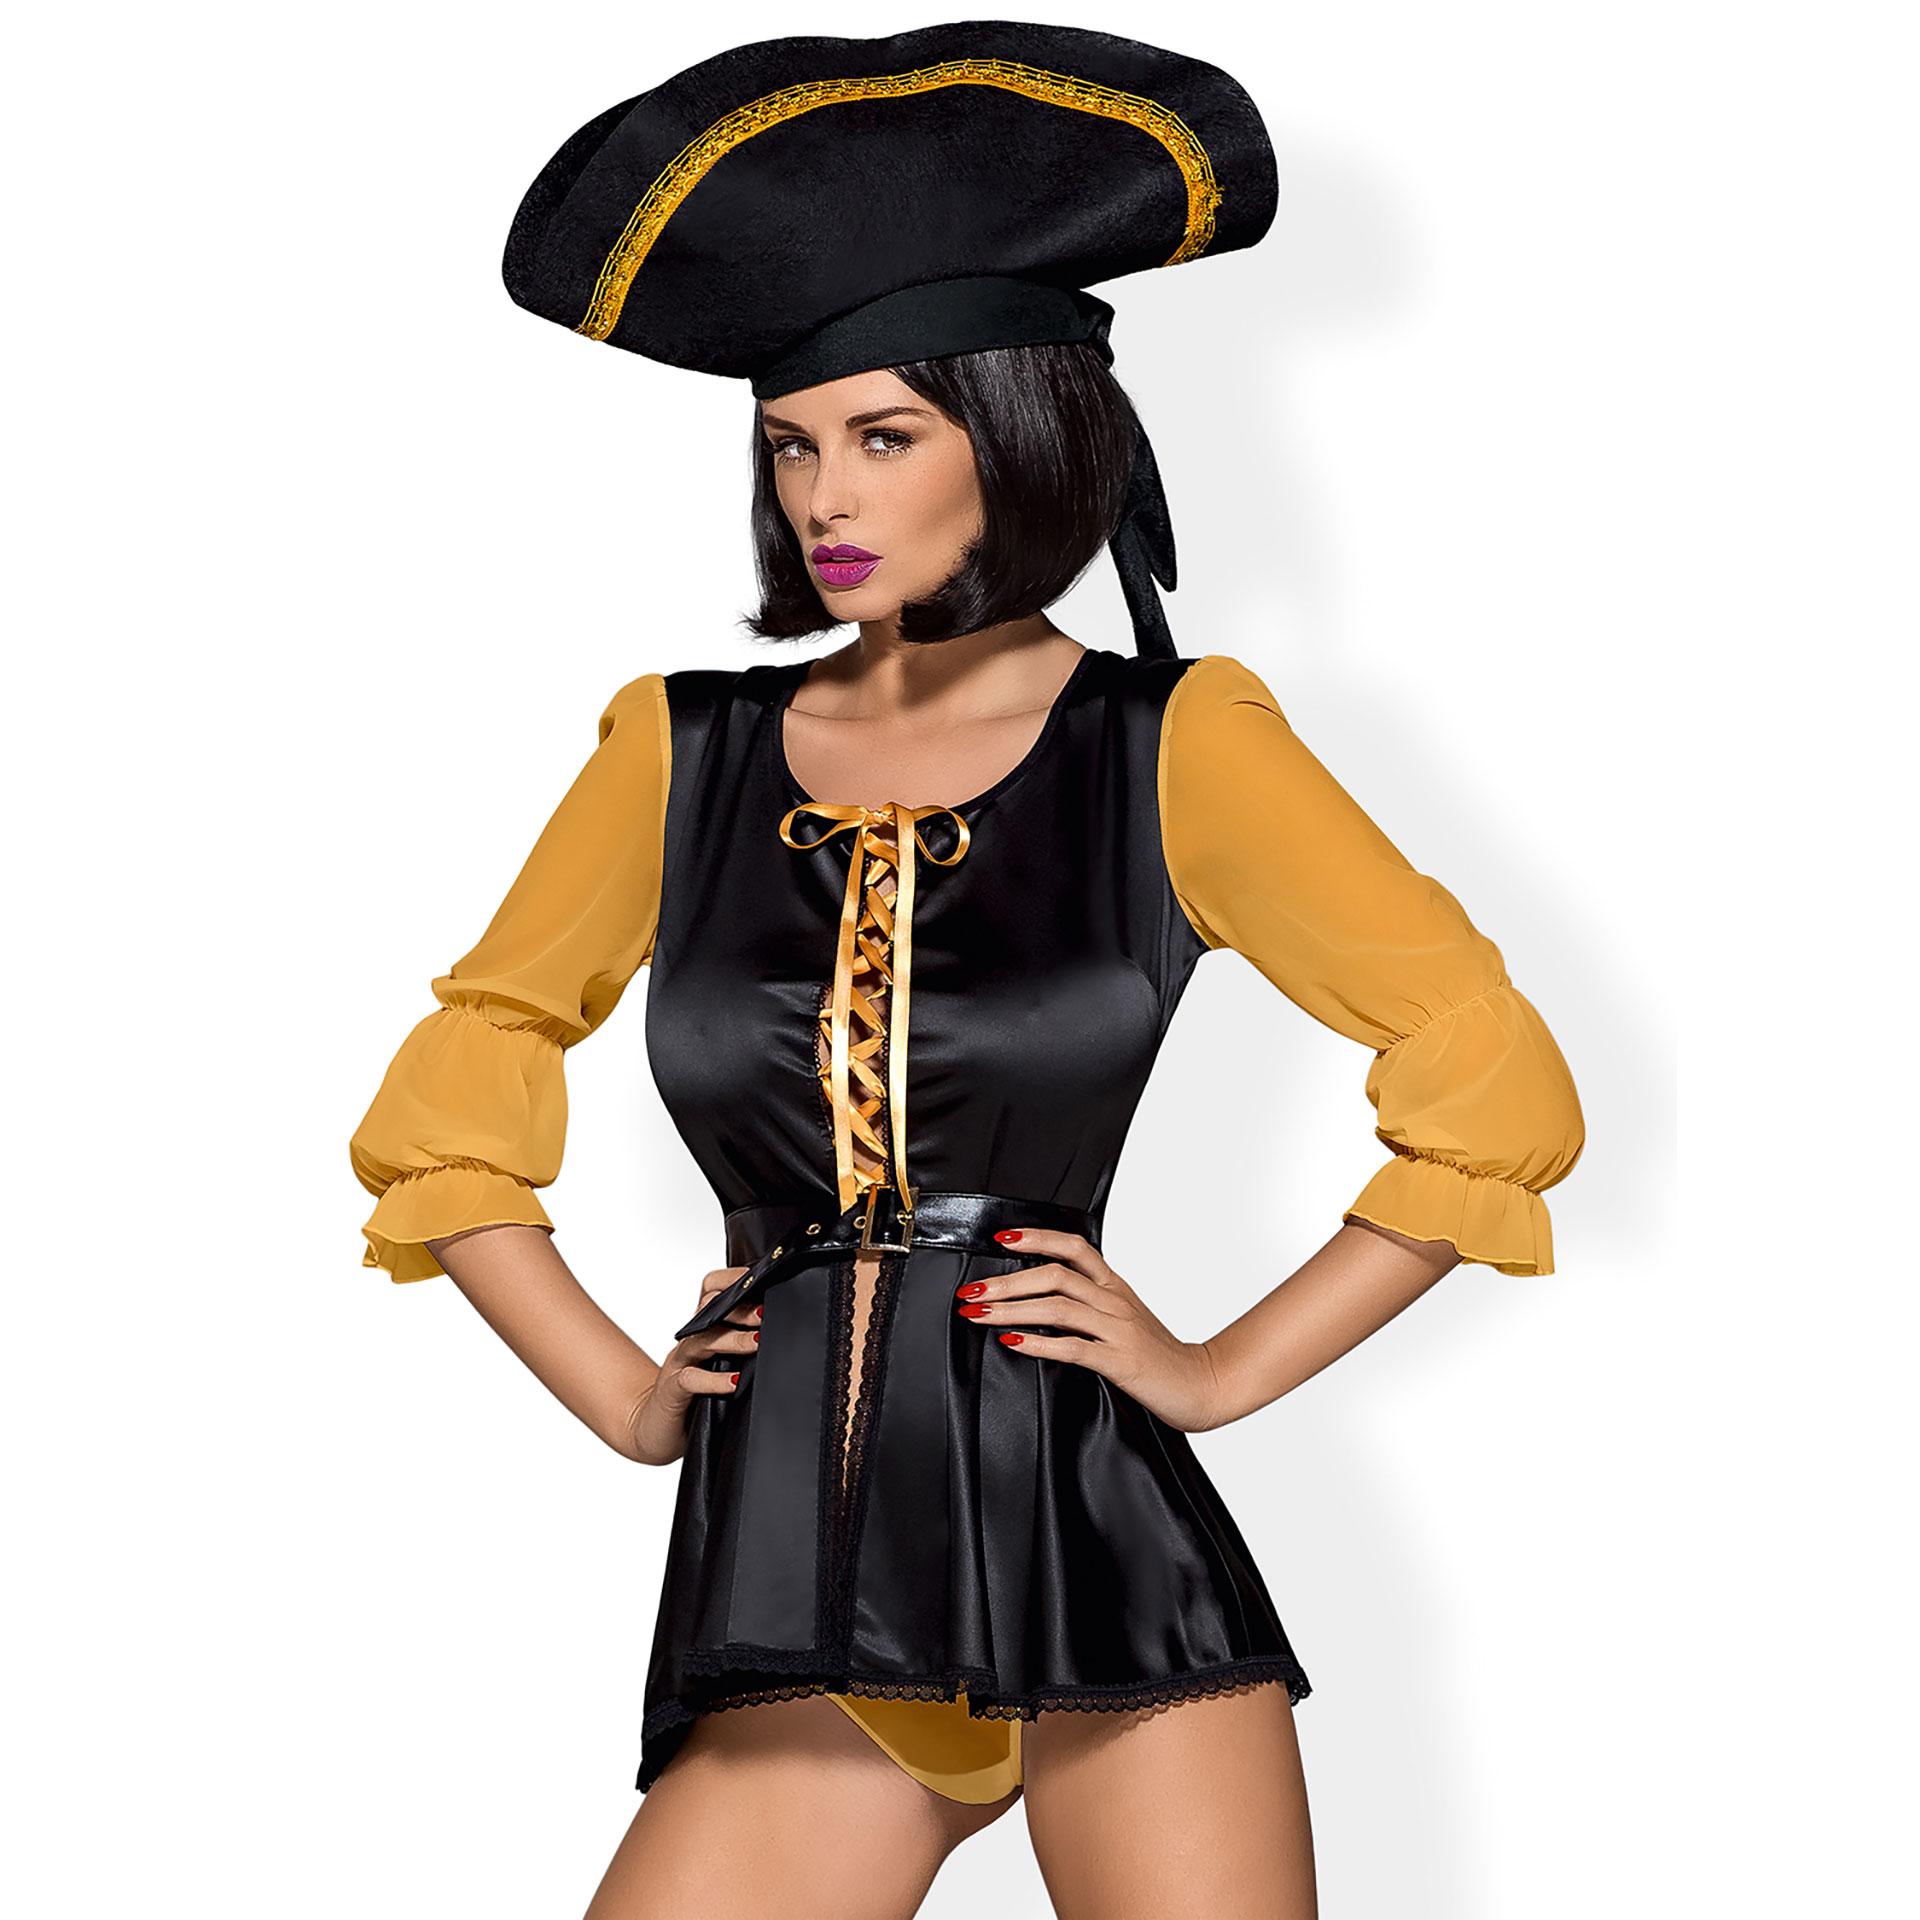 Costume de Pirate